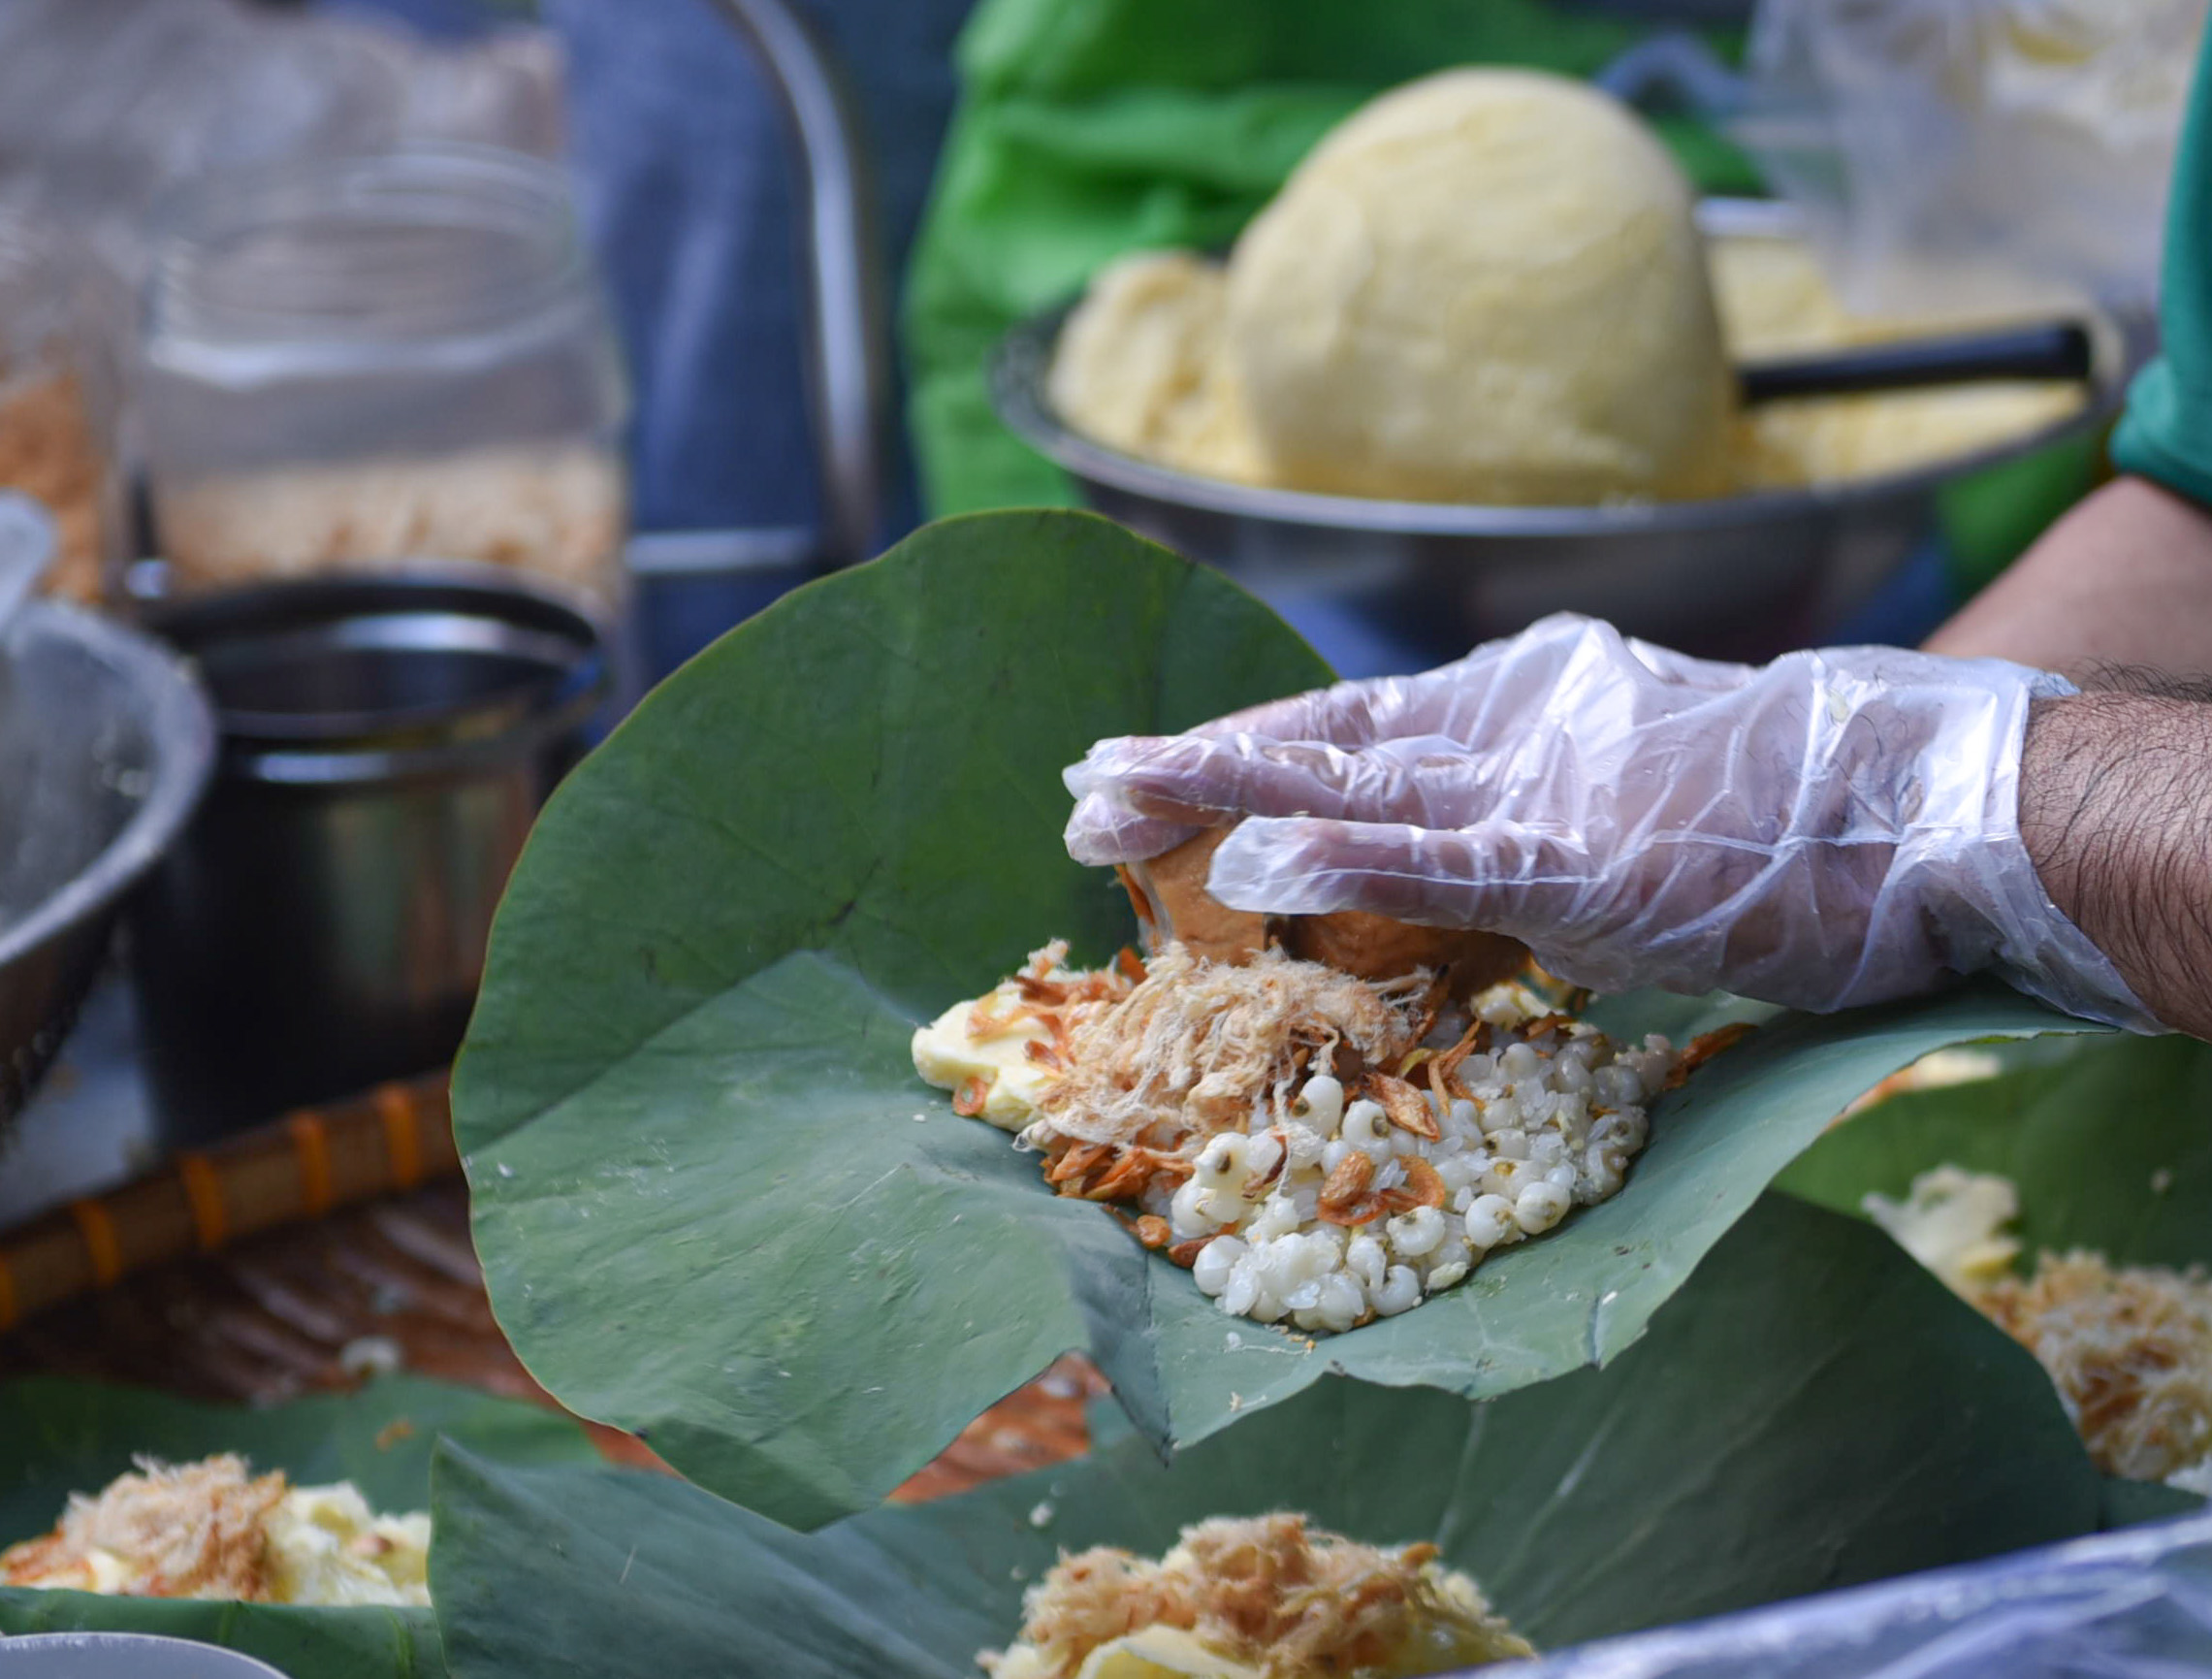 Corn sticky rice is served at Hanh’s stall at 35 Ngo Thi Thu Minh, Ward 2, Tan Binh District, Ho Chi Minh City. Photo: Ngoc Phuong / Tuoi Tre News